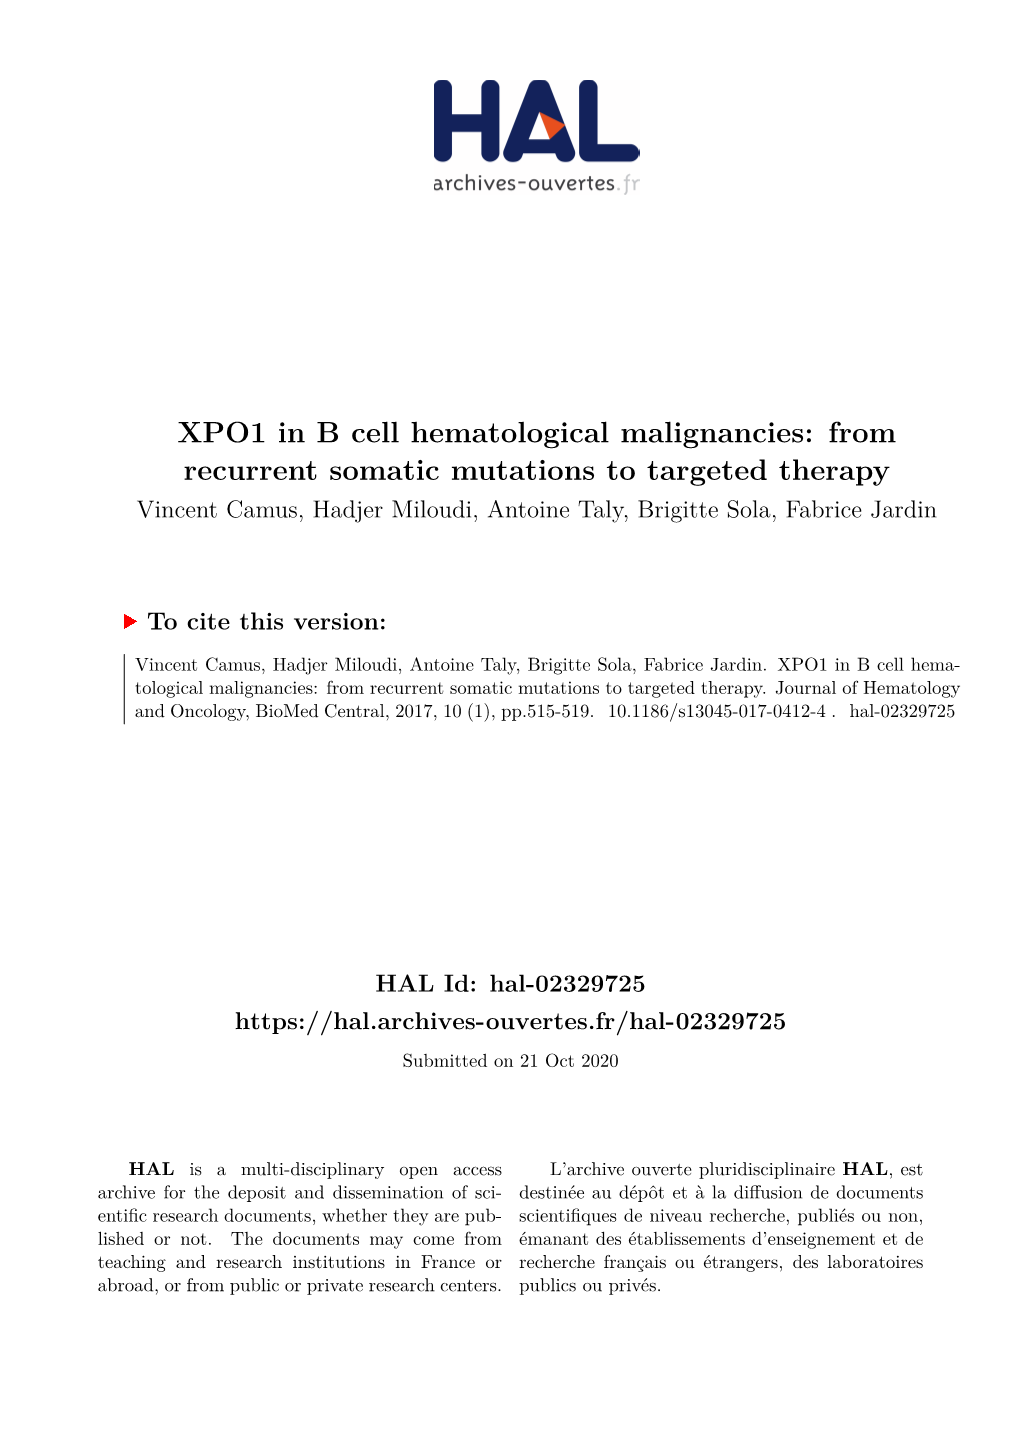 XPO1 in B Cell Hematological Malignancies